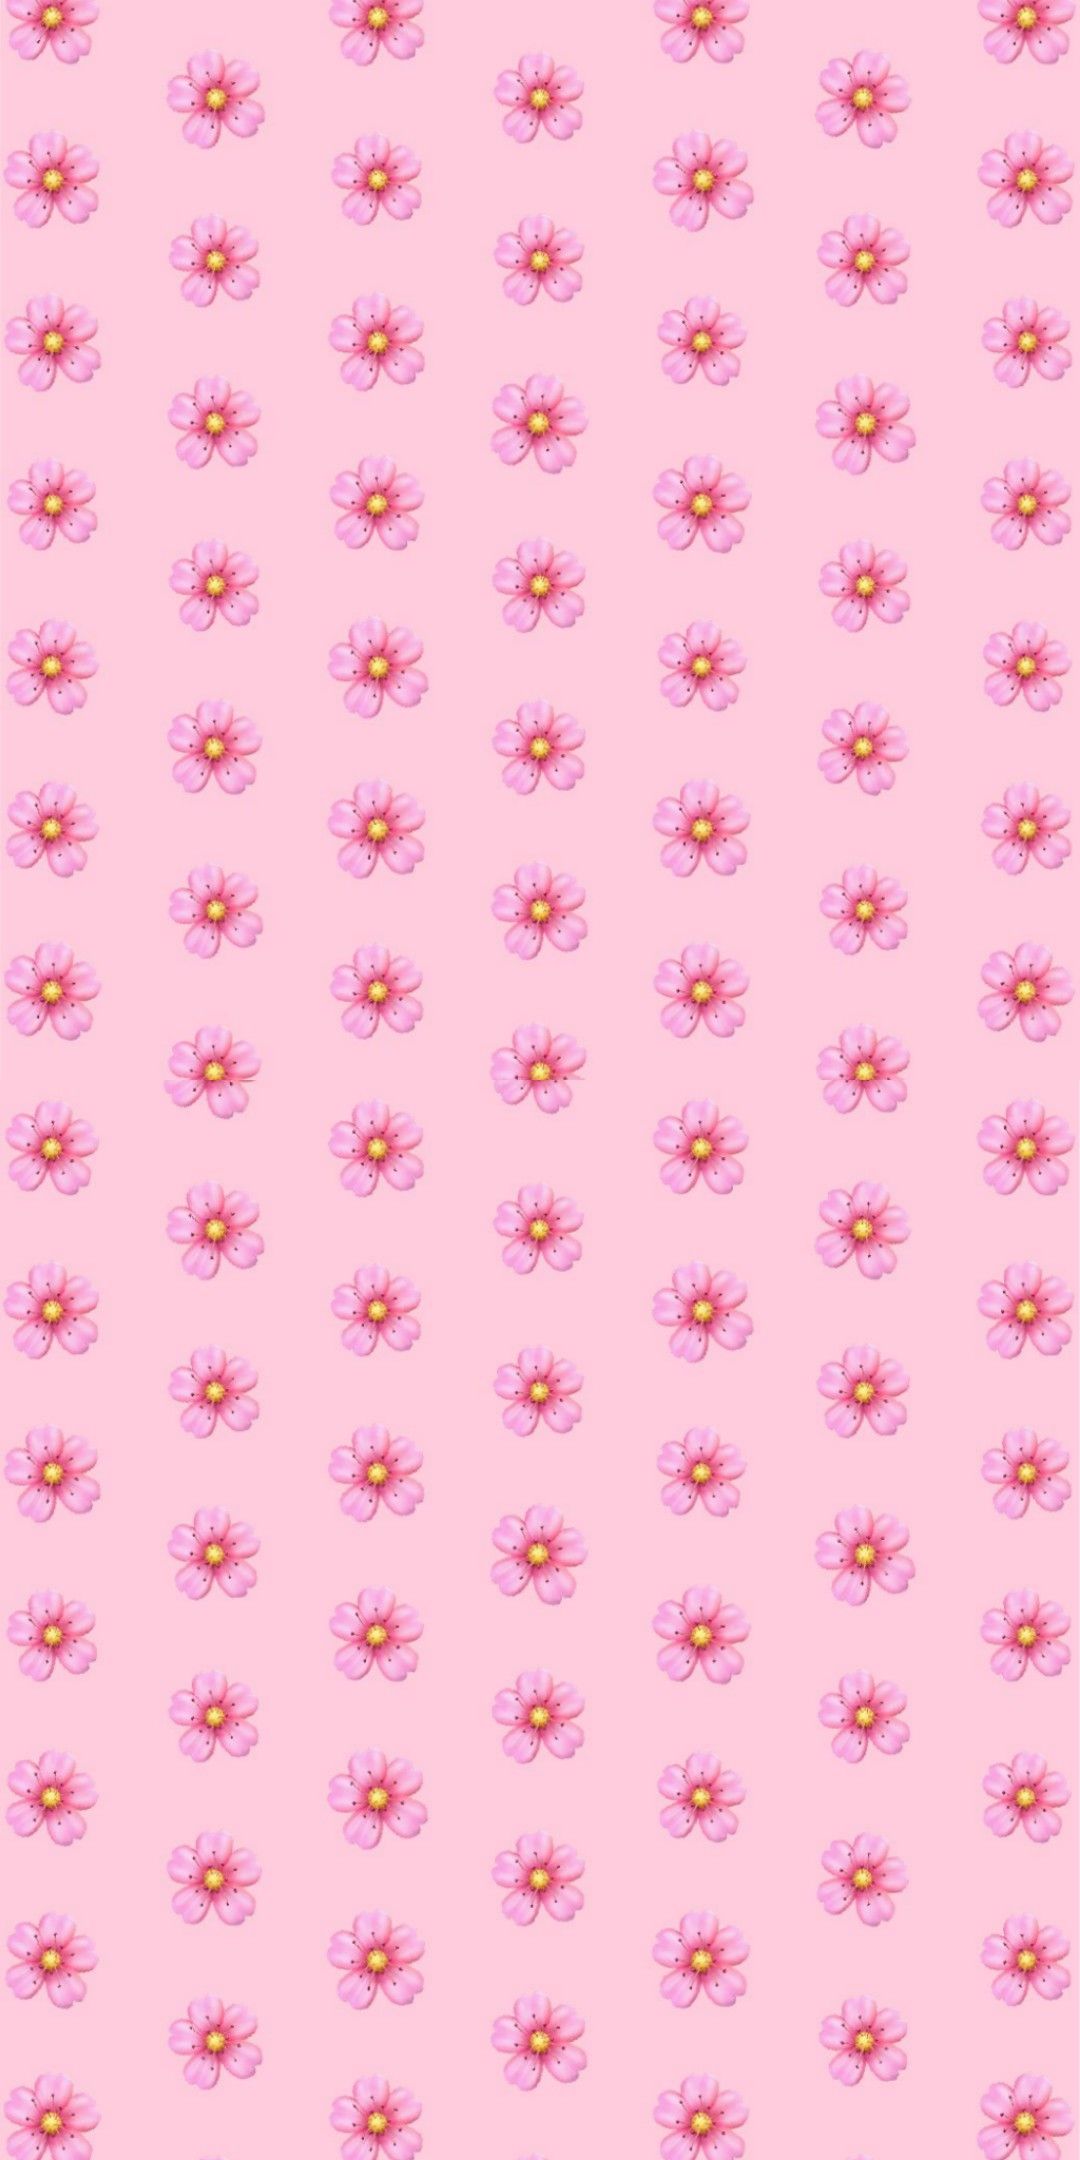 Flowers emoji